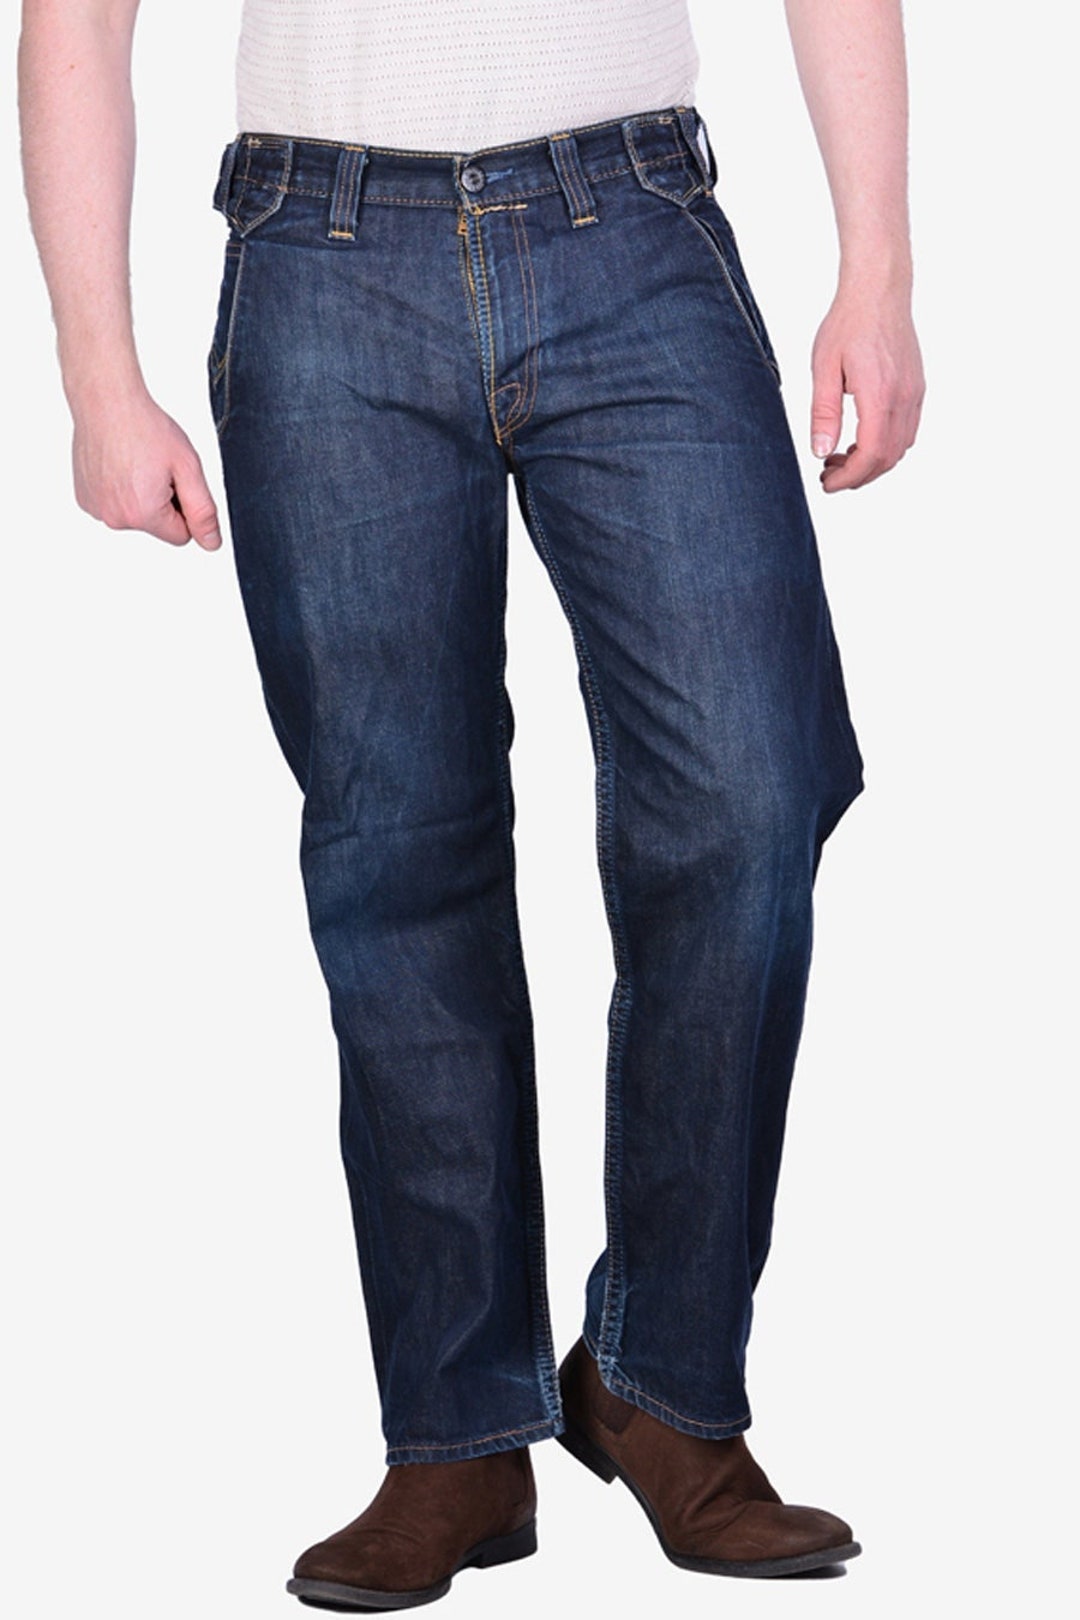 Vintage Levi's 503 Loose Straight Leg Jeans Size 32/30 Etsy Israel